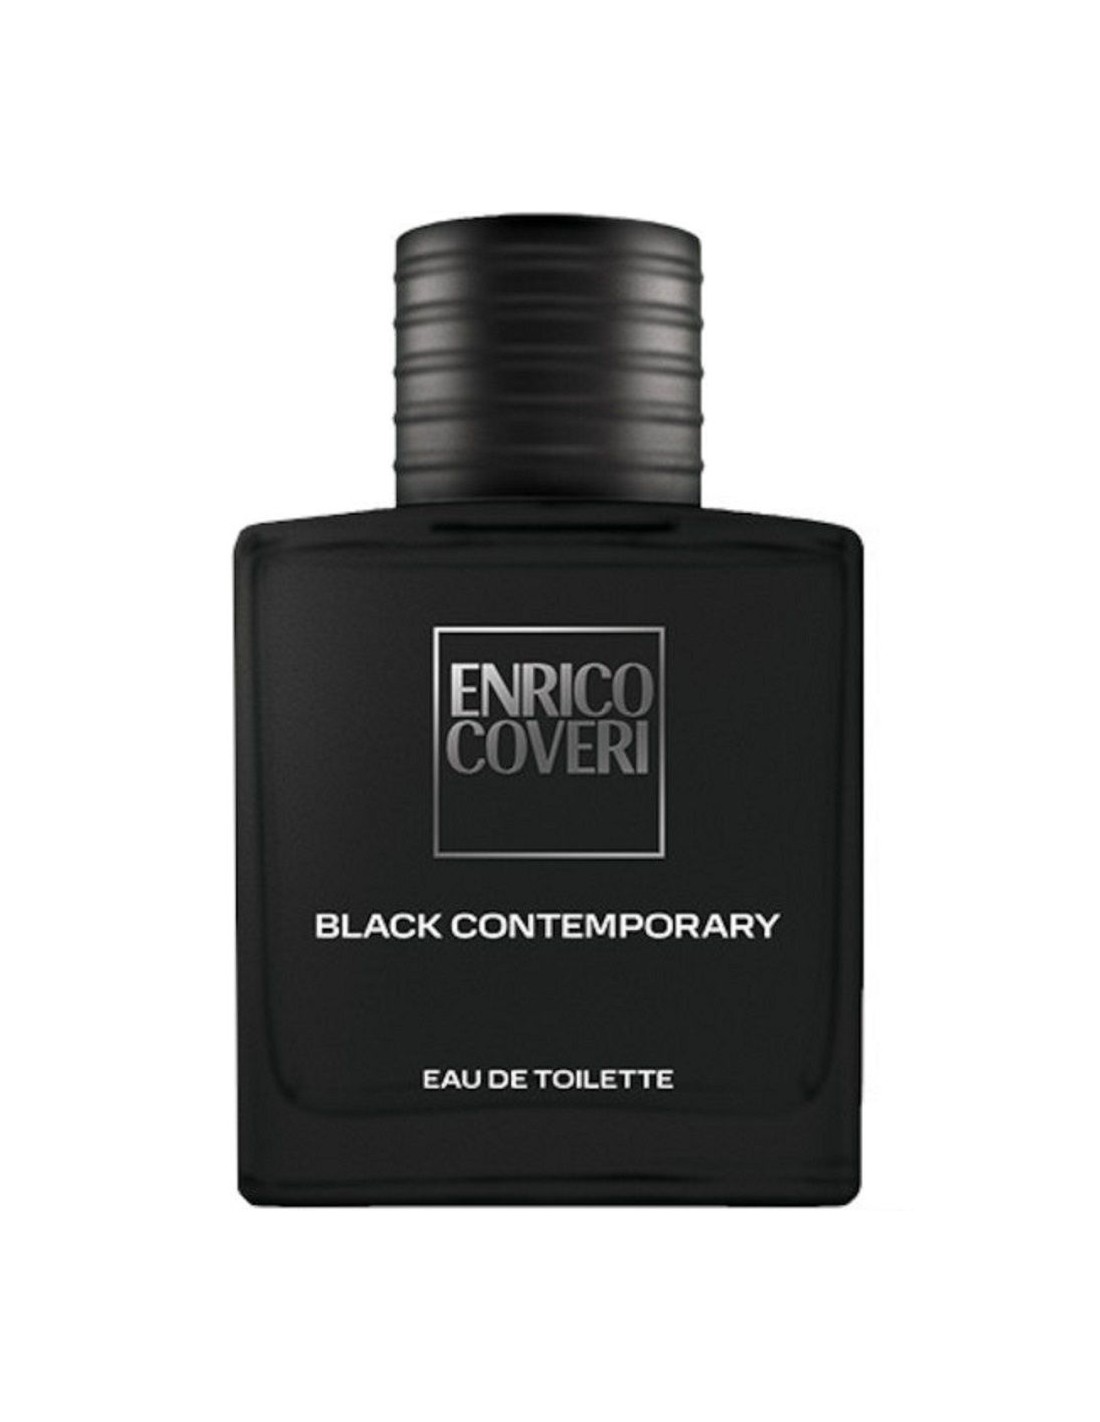 Enrico Coveri Black Contemporary Eau de Toilette 100 ml Spray - TESTER